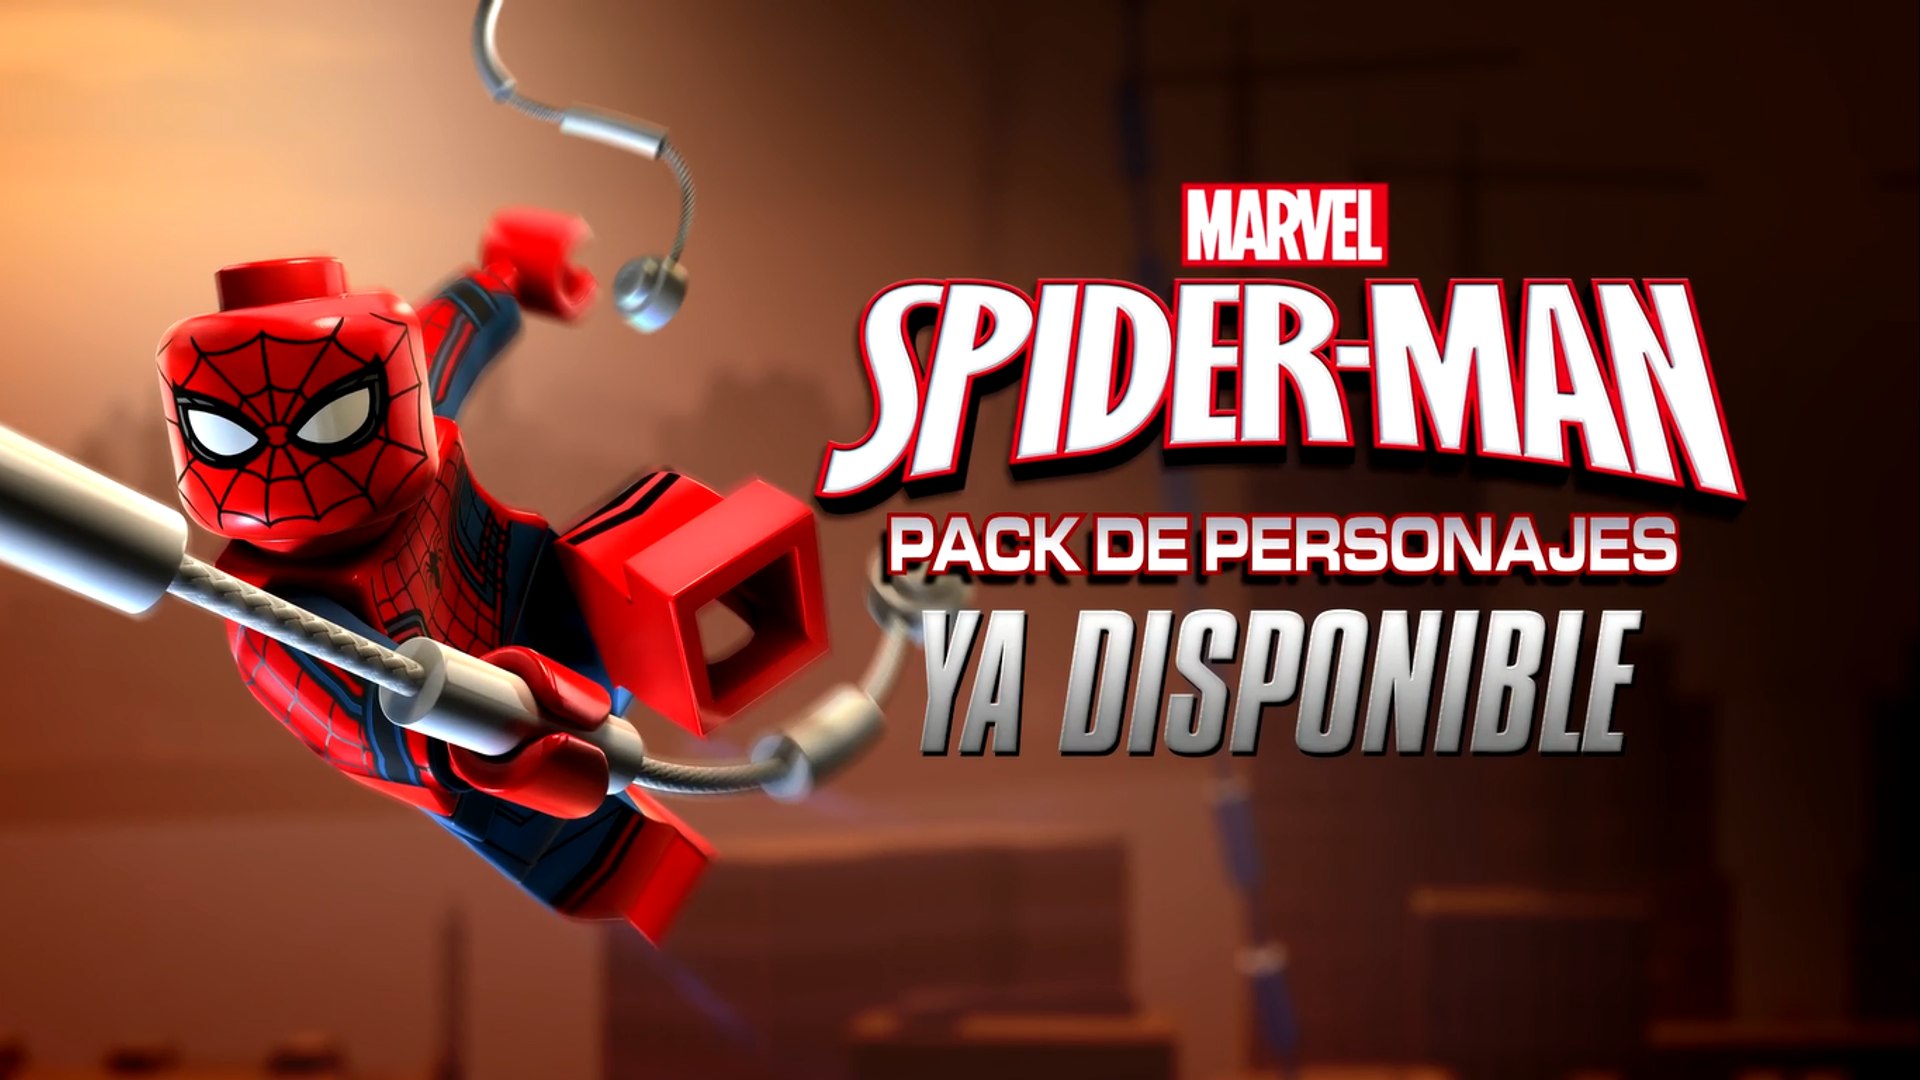 LEGO Marvel Vengadores - Tráiler HD Pack Spiderman - Vídeo Dailymotion